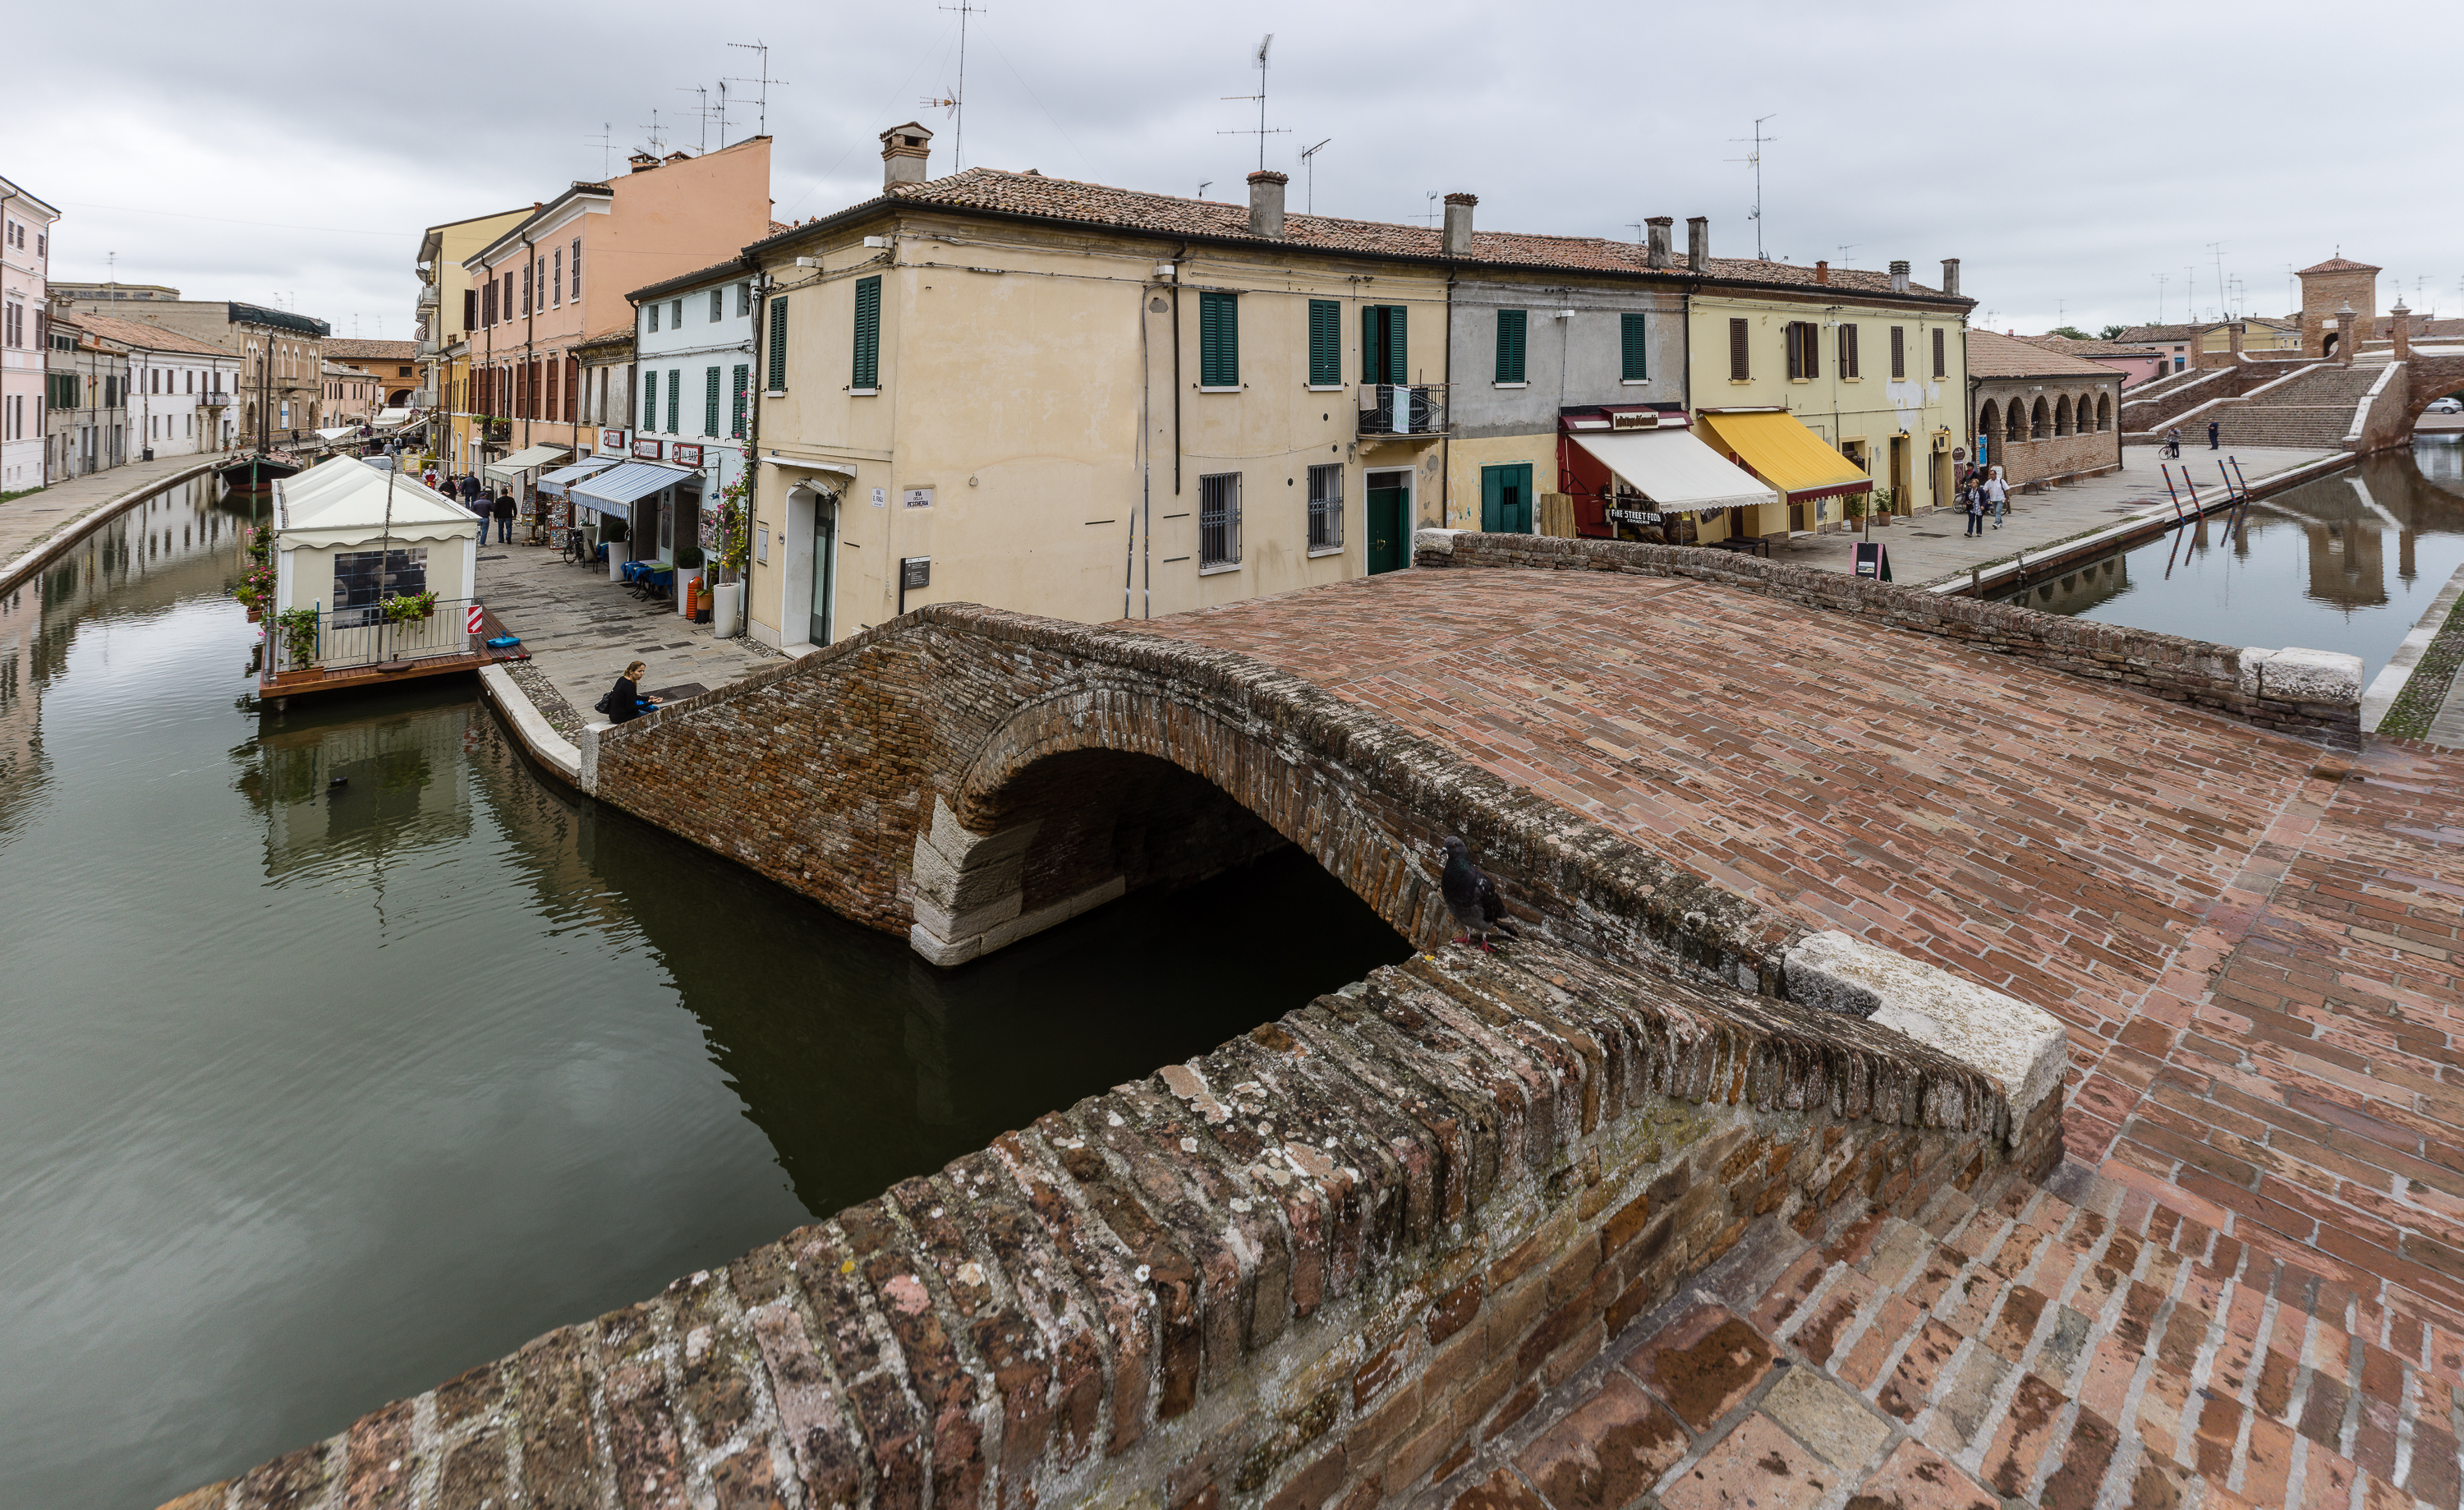 foto: https://upload.wikimedia.org/wikipedia/commons/4/48/Ponte_degli_Sbirri_-_Comacchio_-.jpg